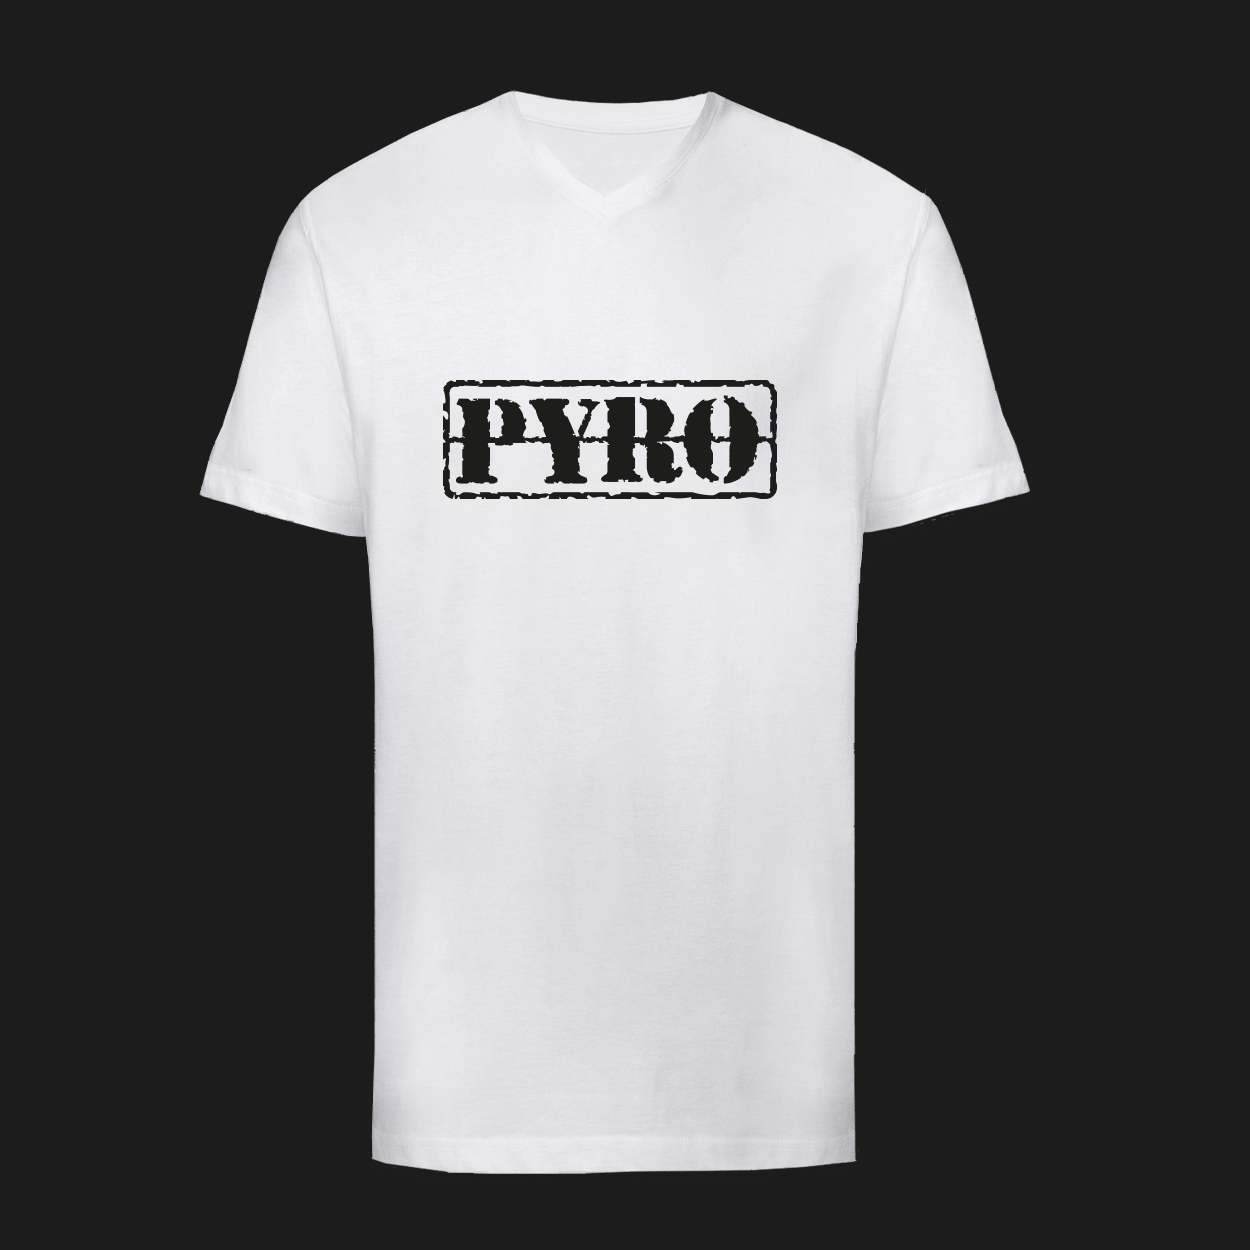 PYRO White - Shirt